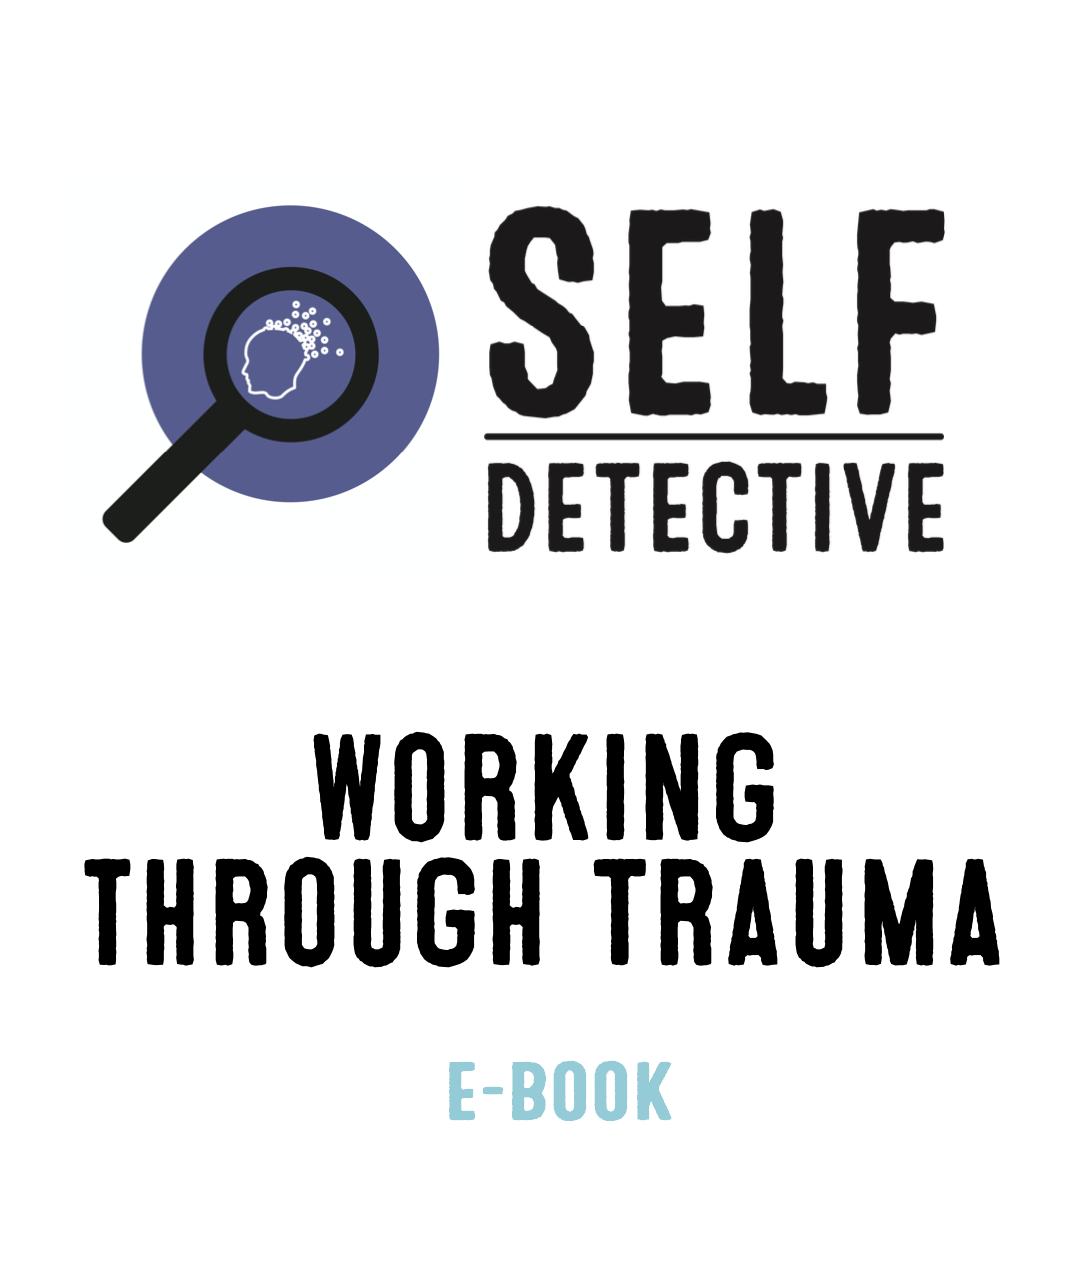 Working Through Trauma (E-book version)